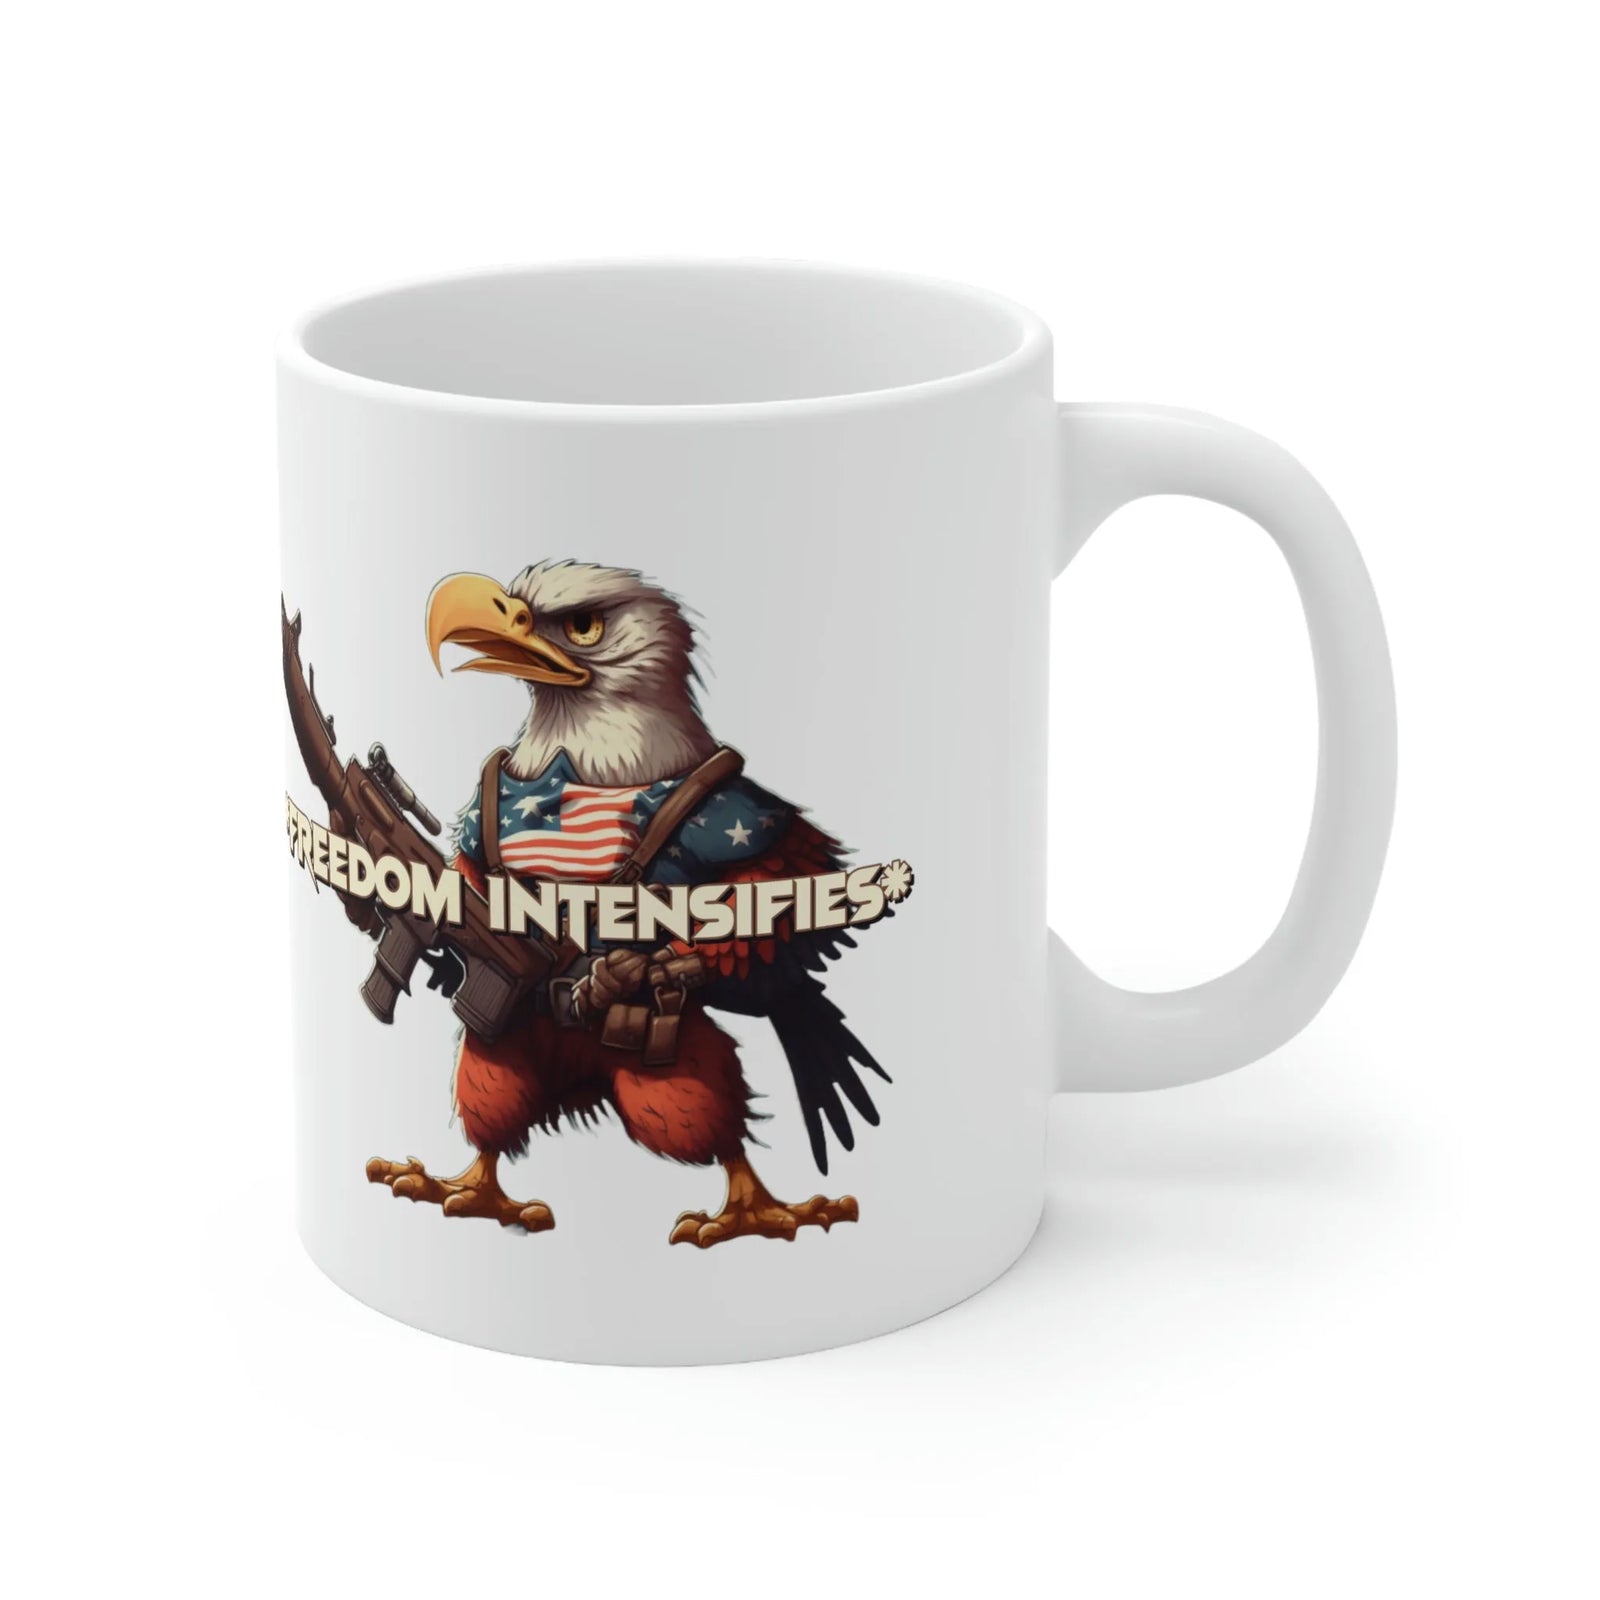 Freedom Intensifies Eagle Ceramic Mug 11oz